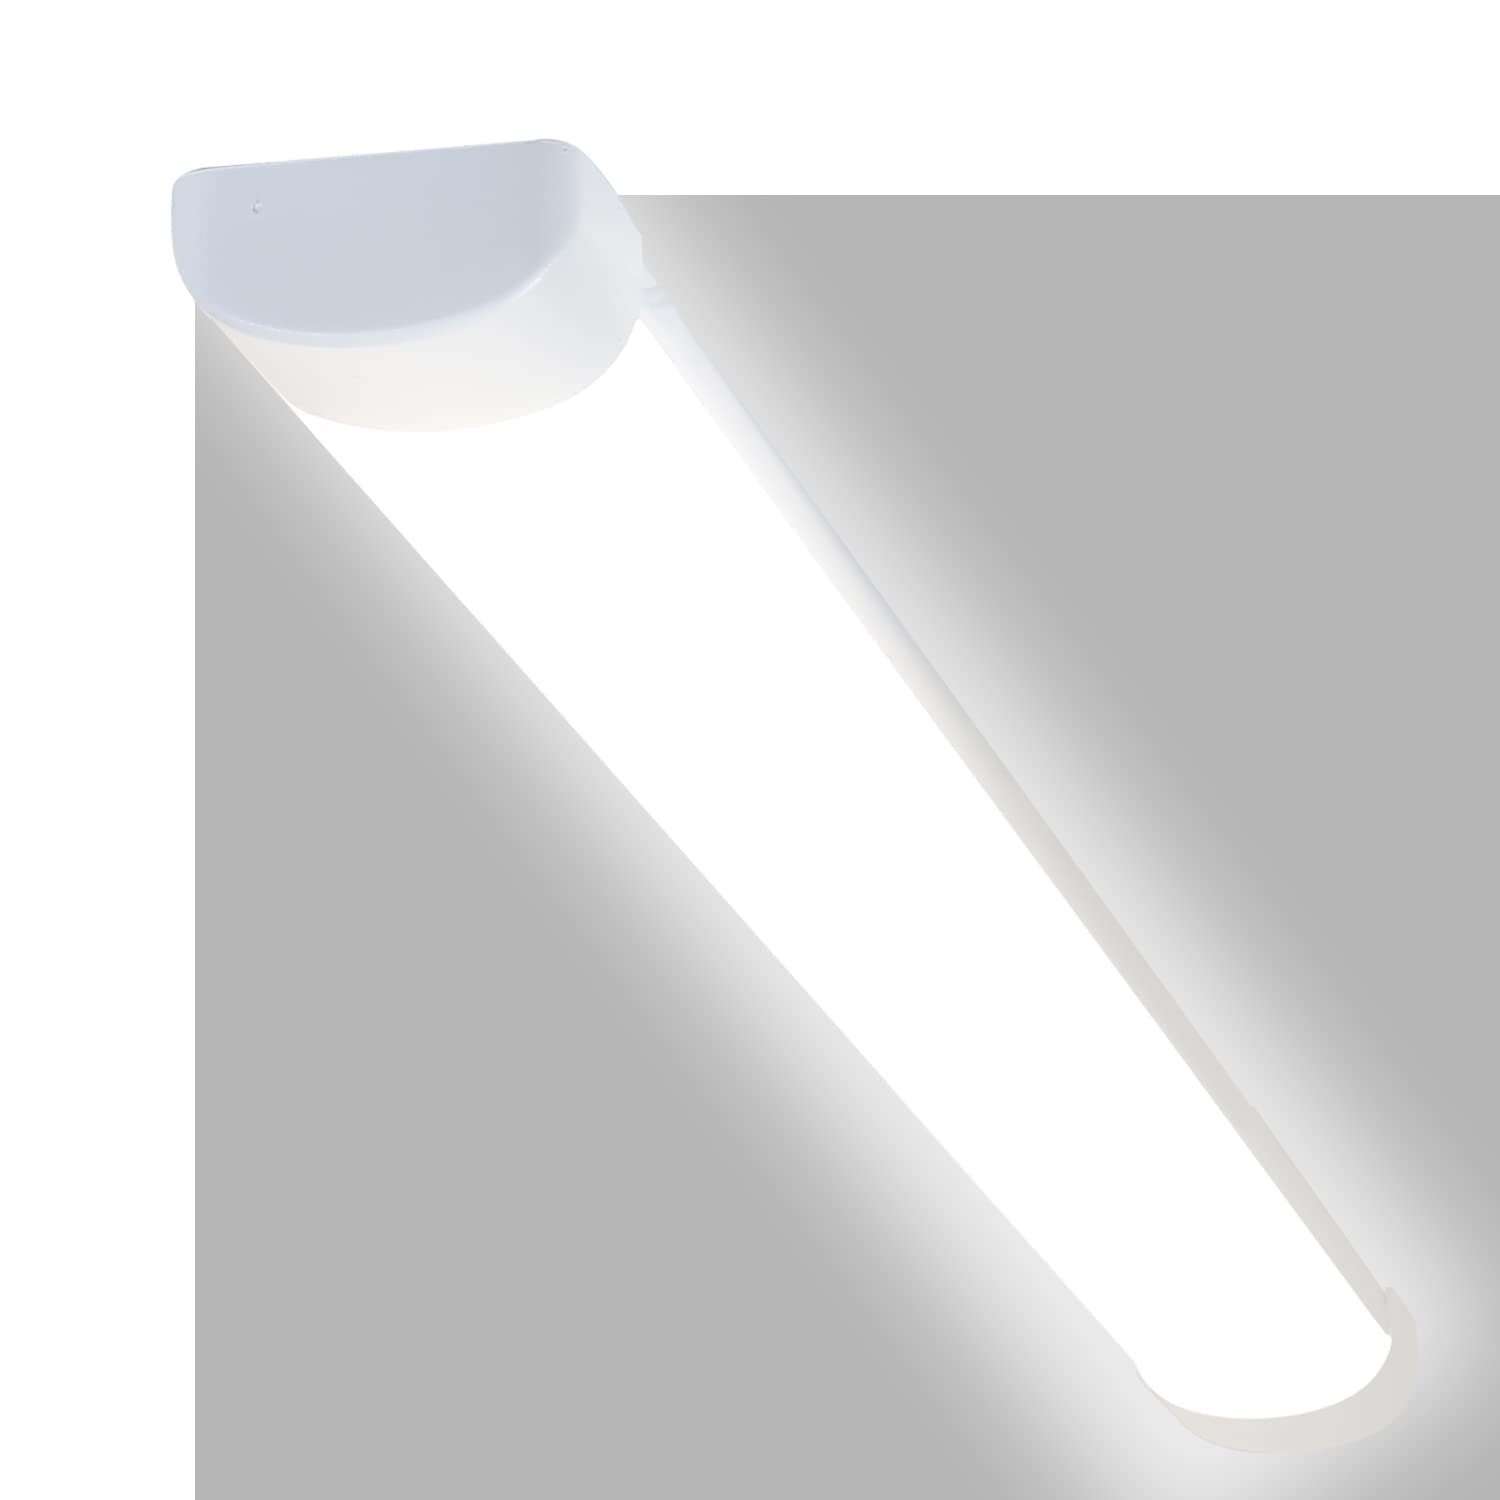 ZMH LED Deckenleuchte Kellerlampe Flach Neutralweiß Röhre, LED fest integriert, Kaltweiß, 24W, 2500lm